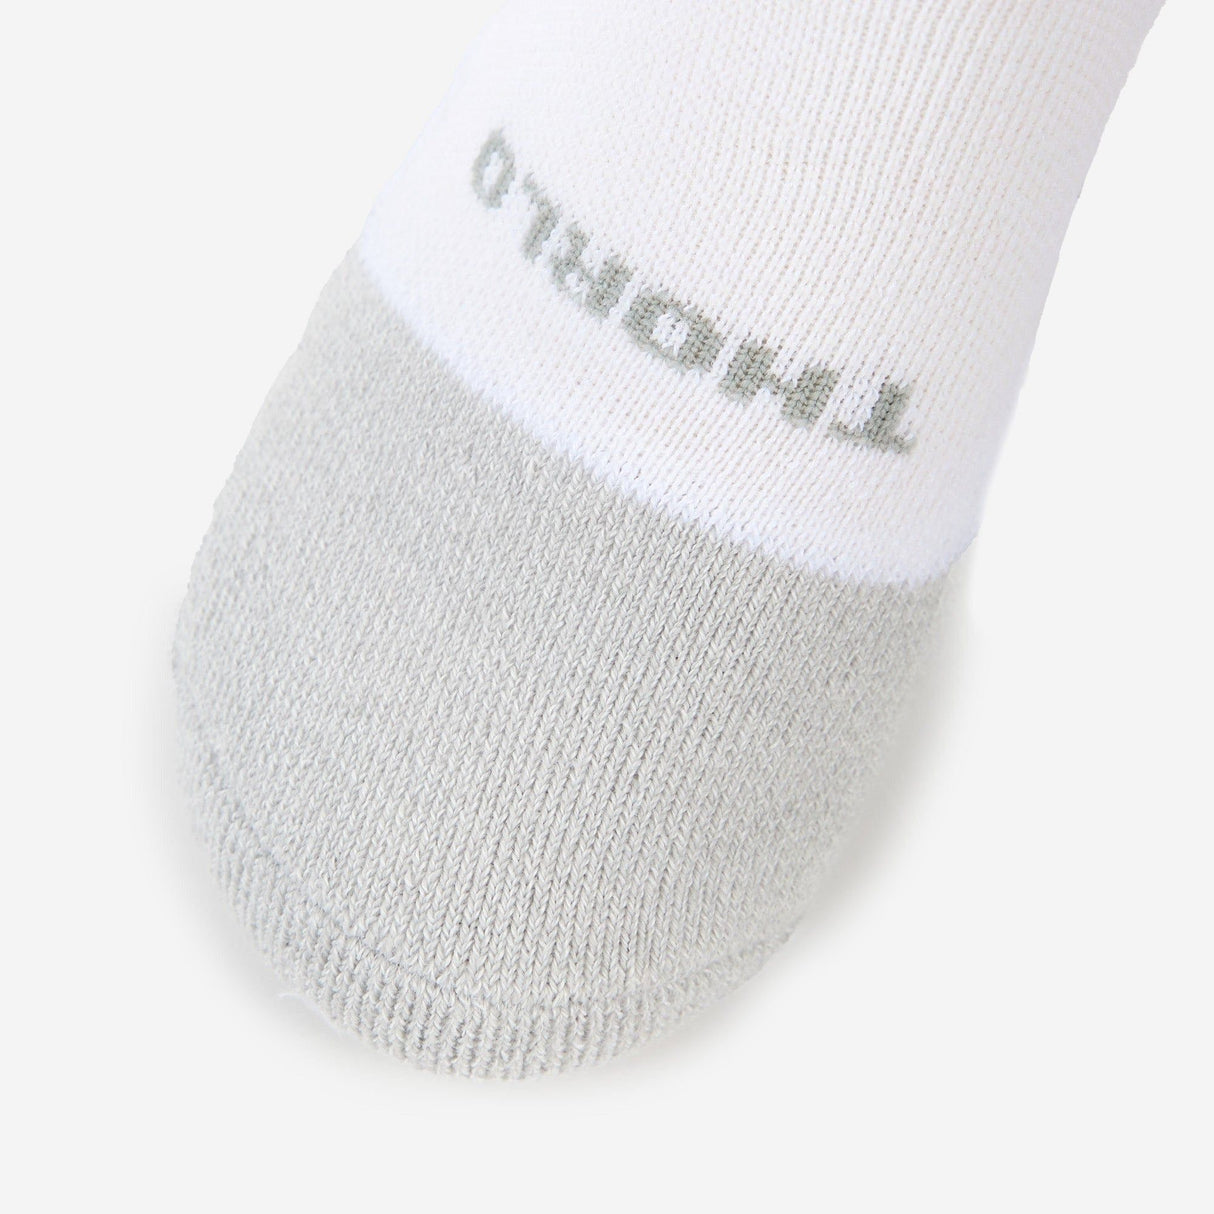 Thorlo Pickleball Light Cushion Low-Cut Socks  - 